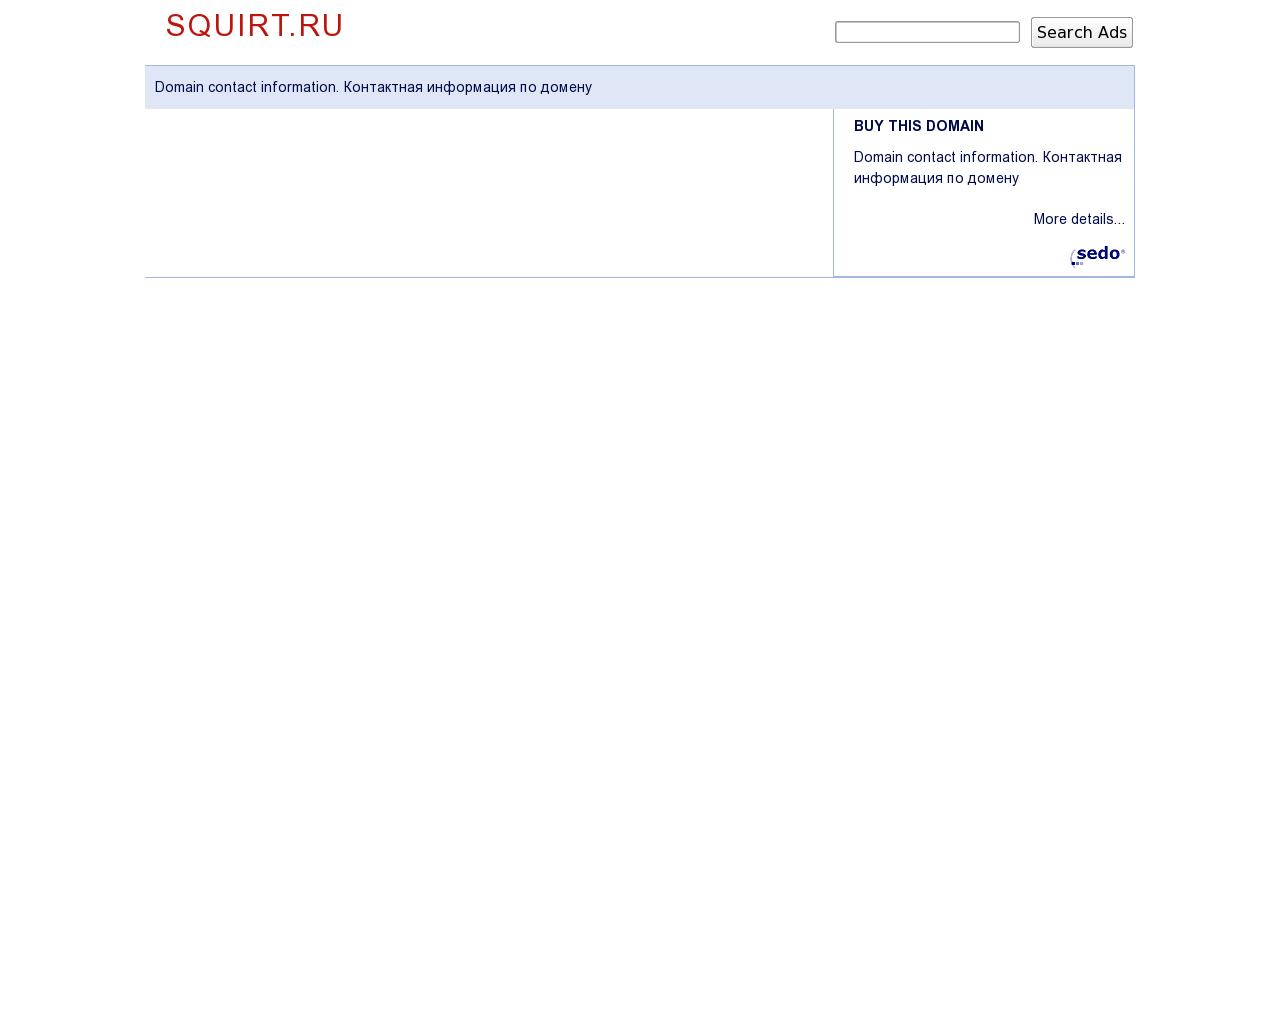 Изображение сайта squirt.ru в разрешении 1280x1024